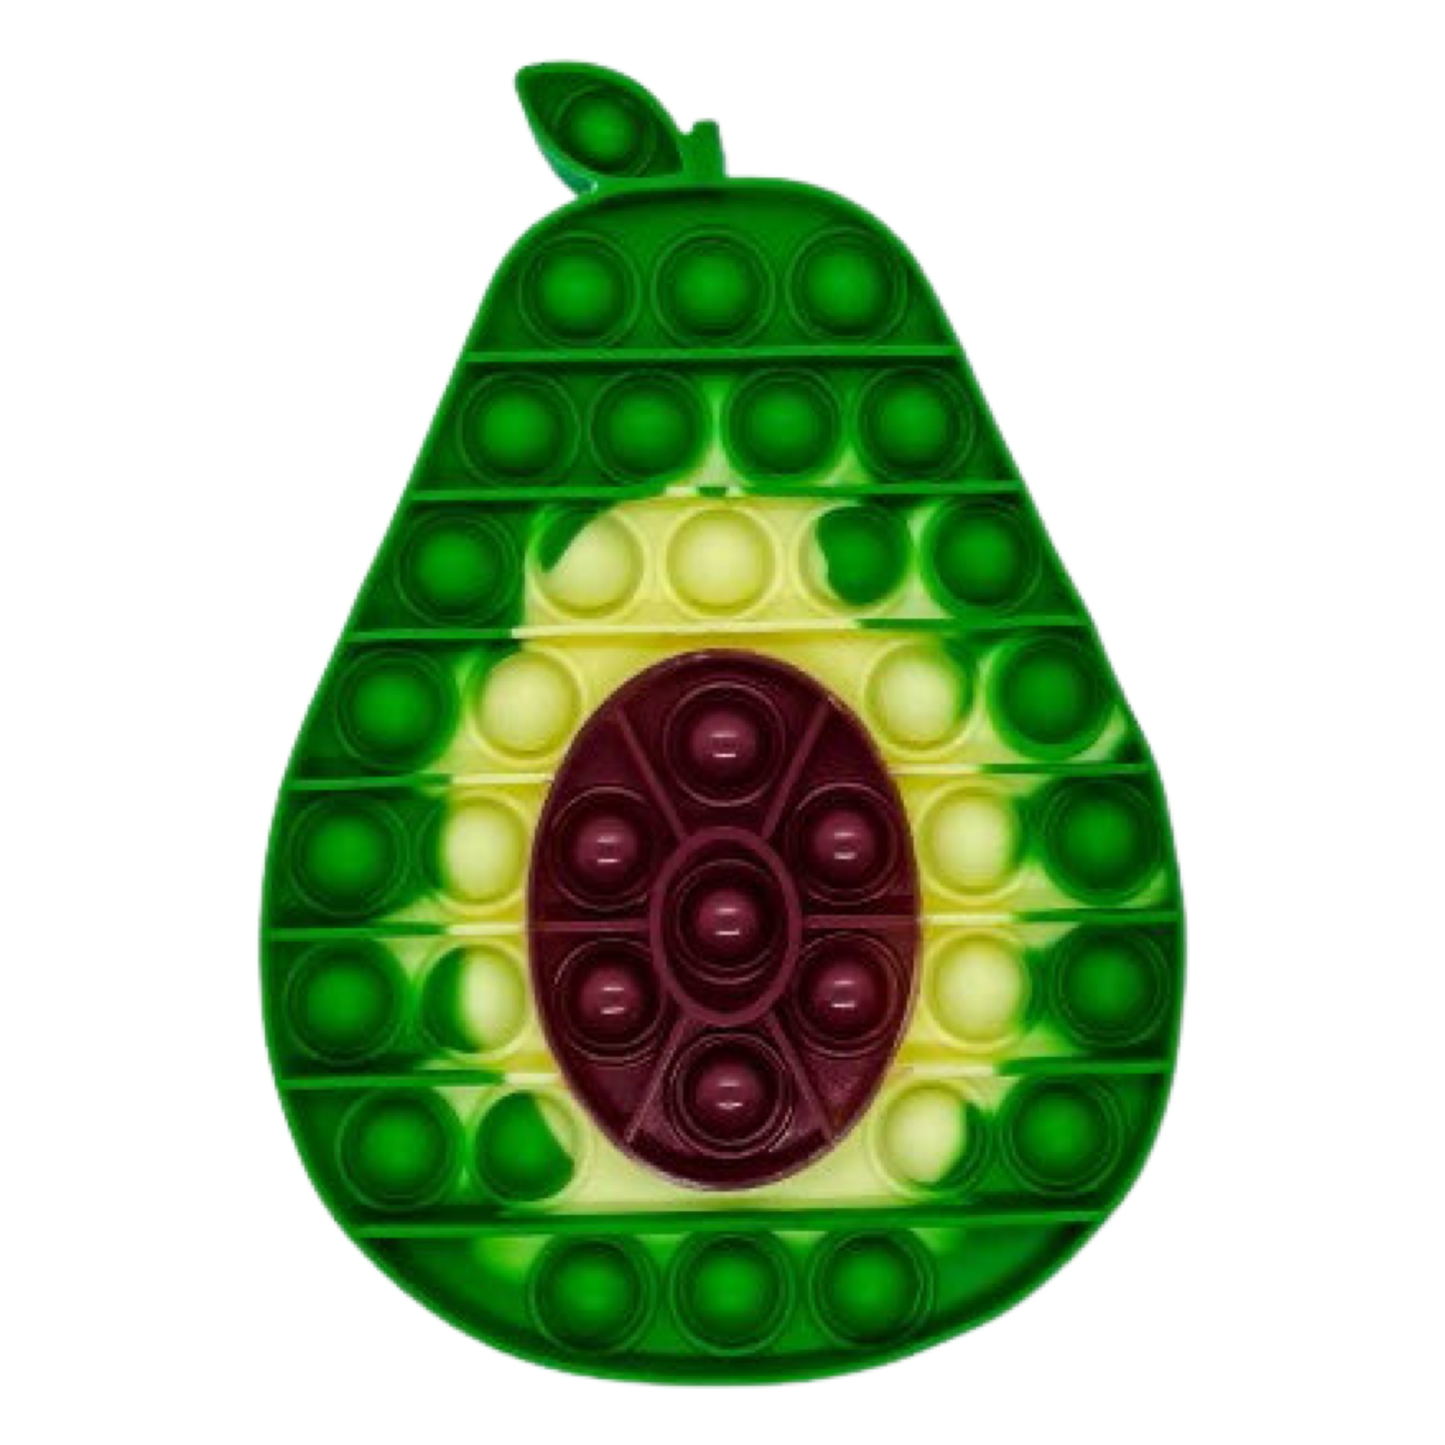 Avocado Popper